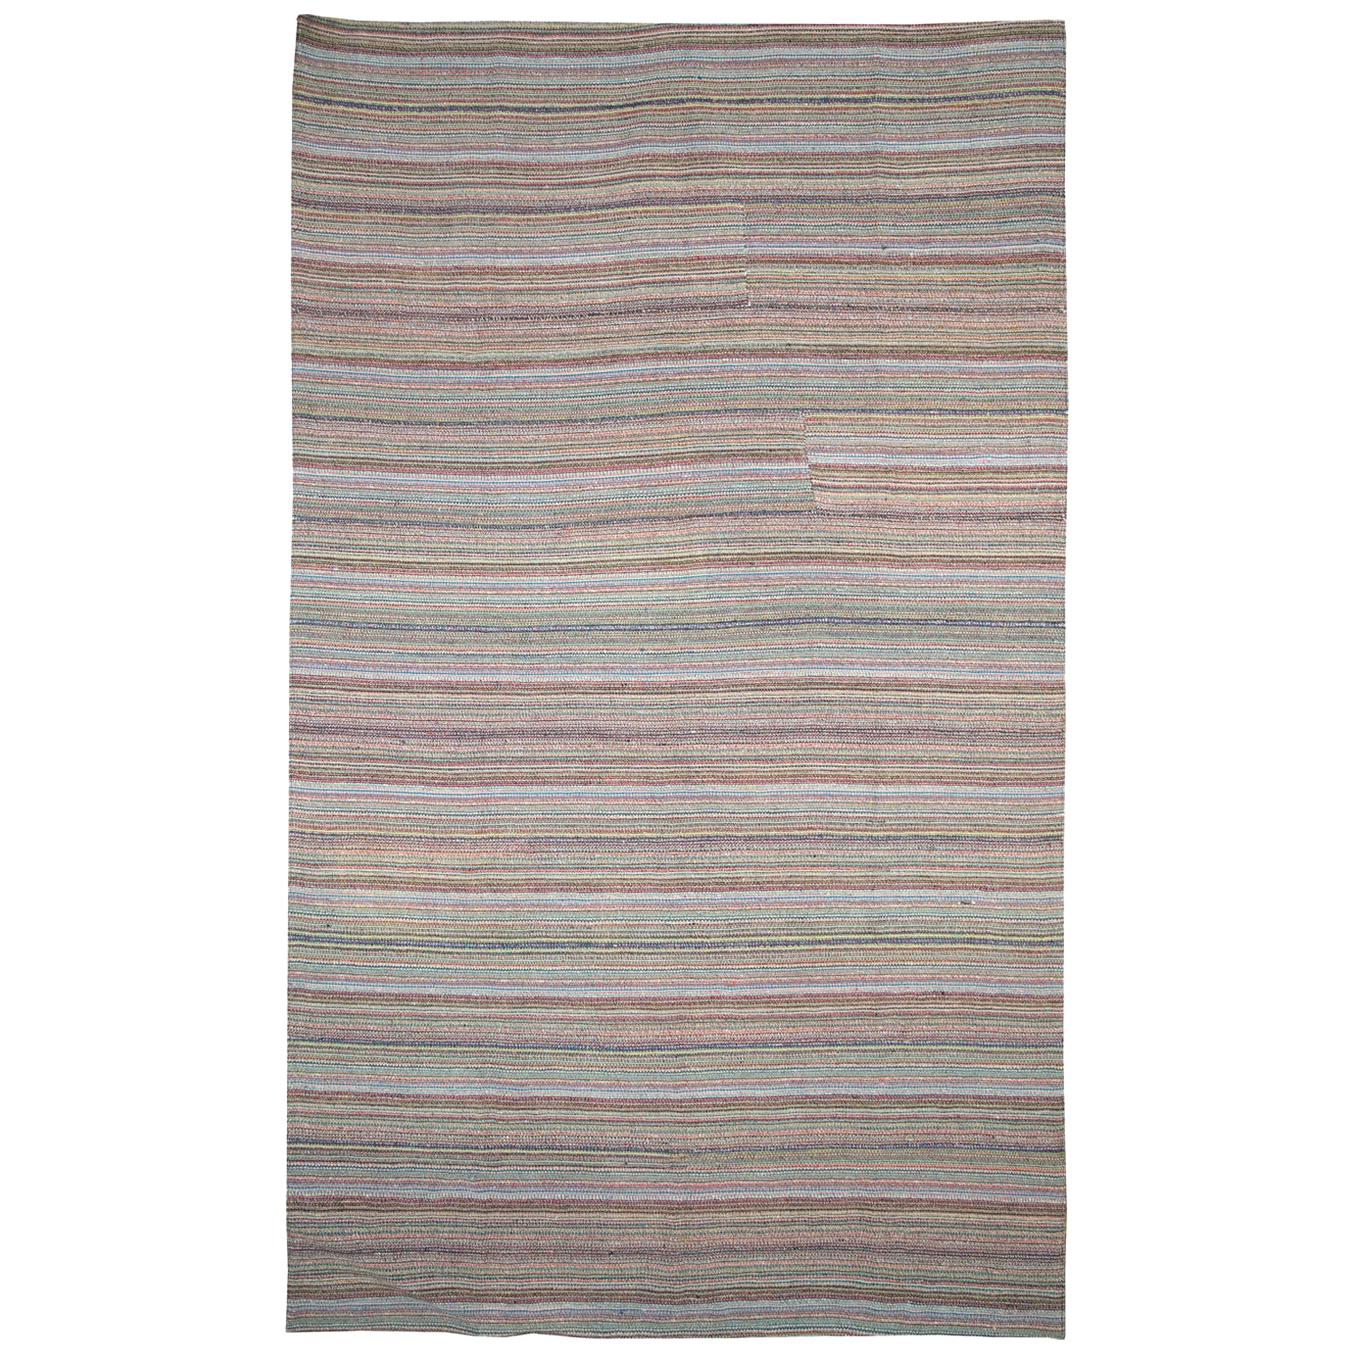 Mid-20th Century Handmade Persian Flat-Weave Kilim Room Size Carpet For Sale